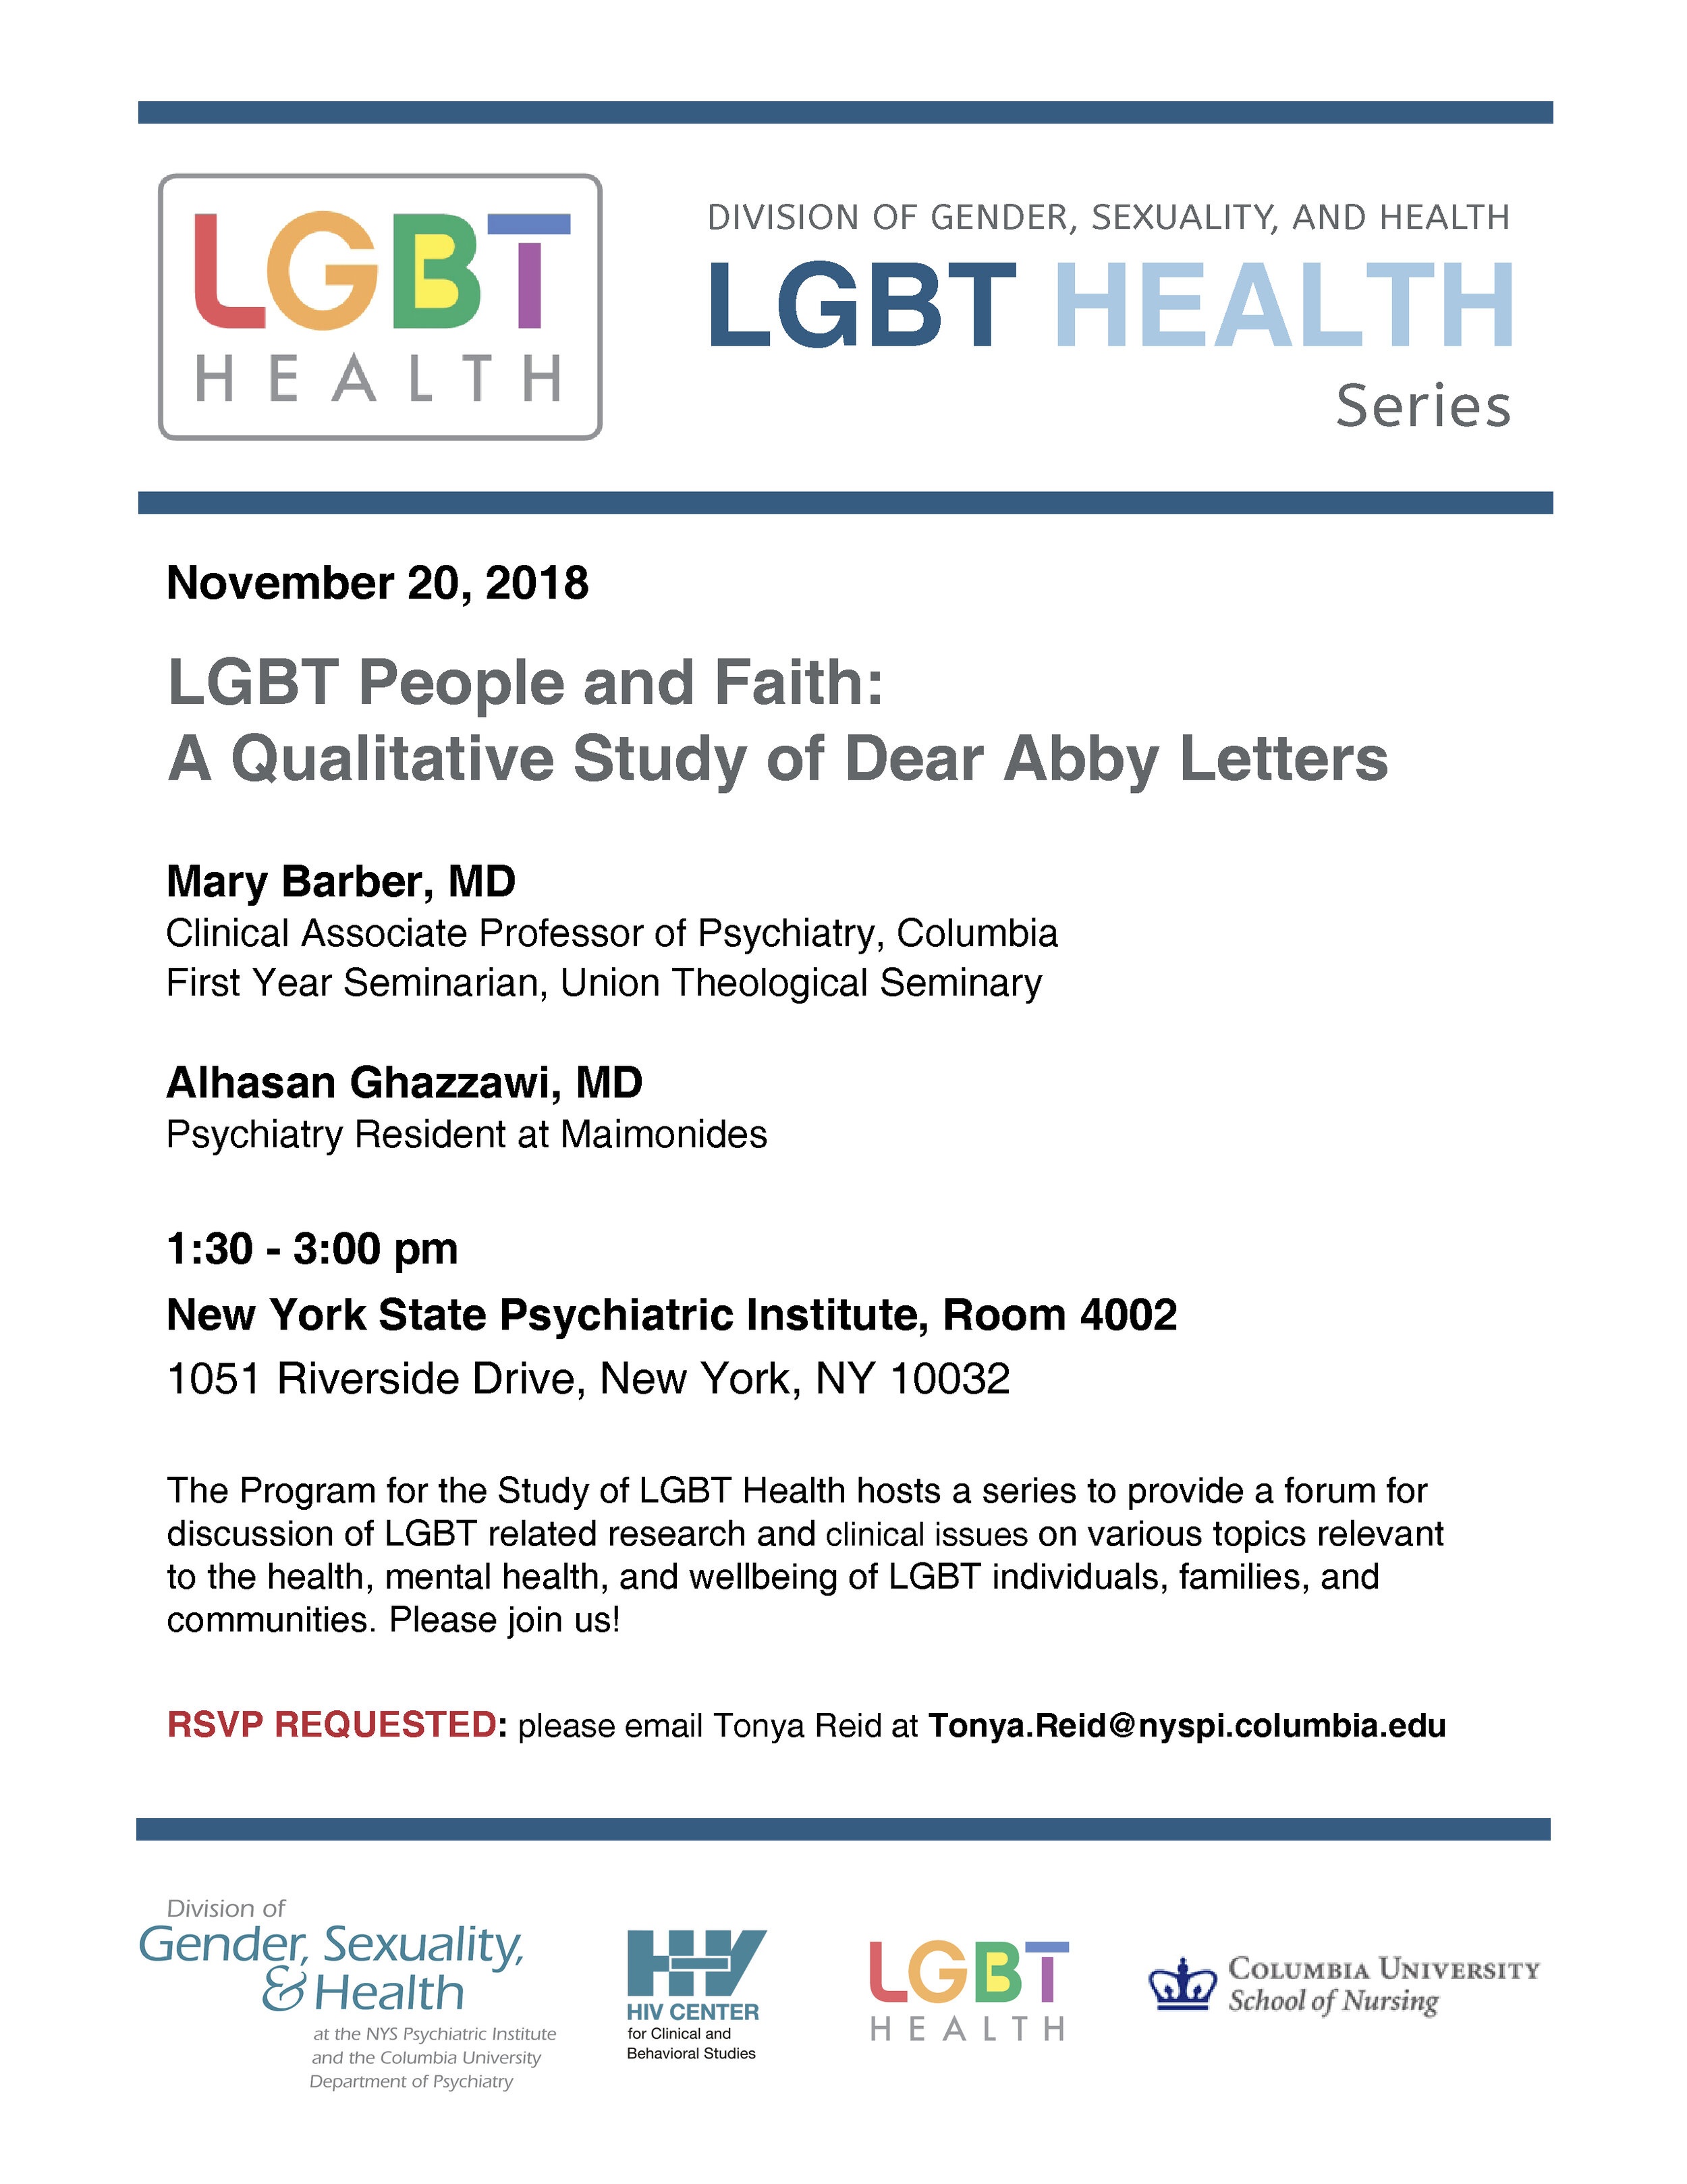 LGBT Health Series Nov 20 2018.jpg